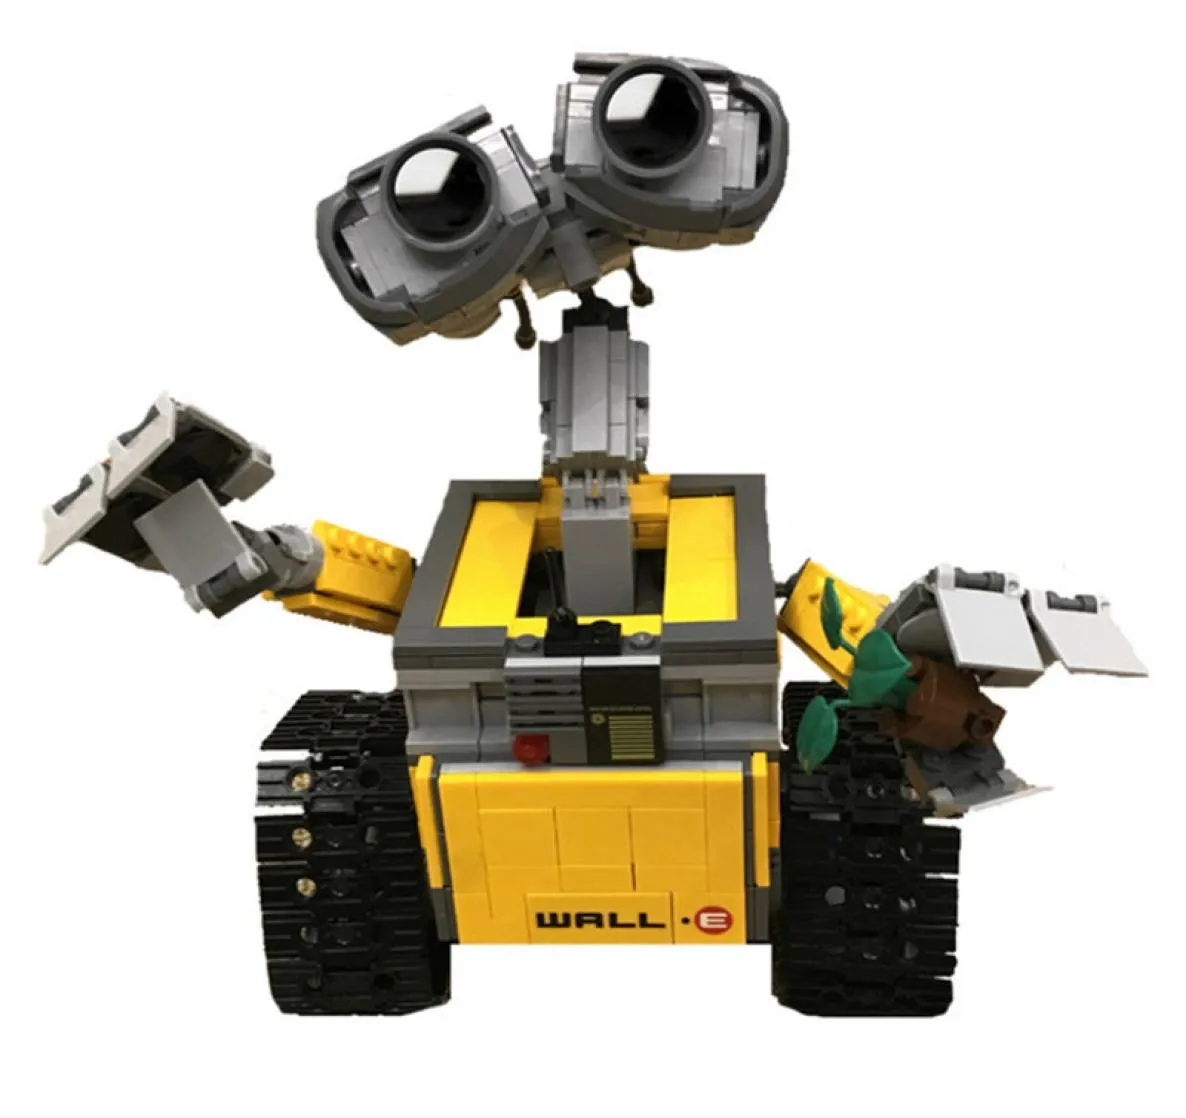 21303 Ideas WALL E Robot Building Blocks Toy 687 pcs Robot Model Building Bricks Toys Children Compatible Ideas WALL E Toys C11151462943